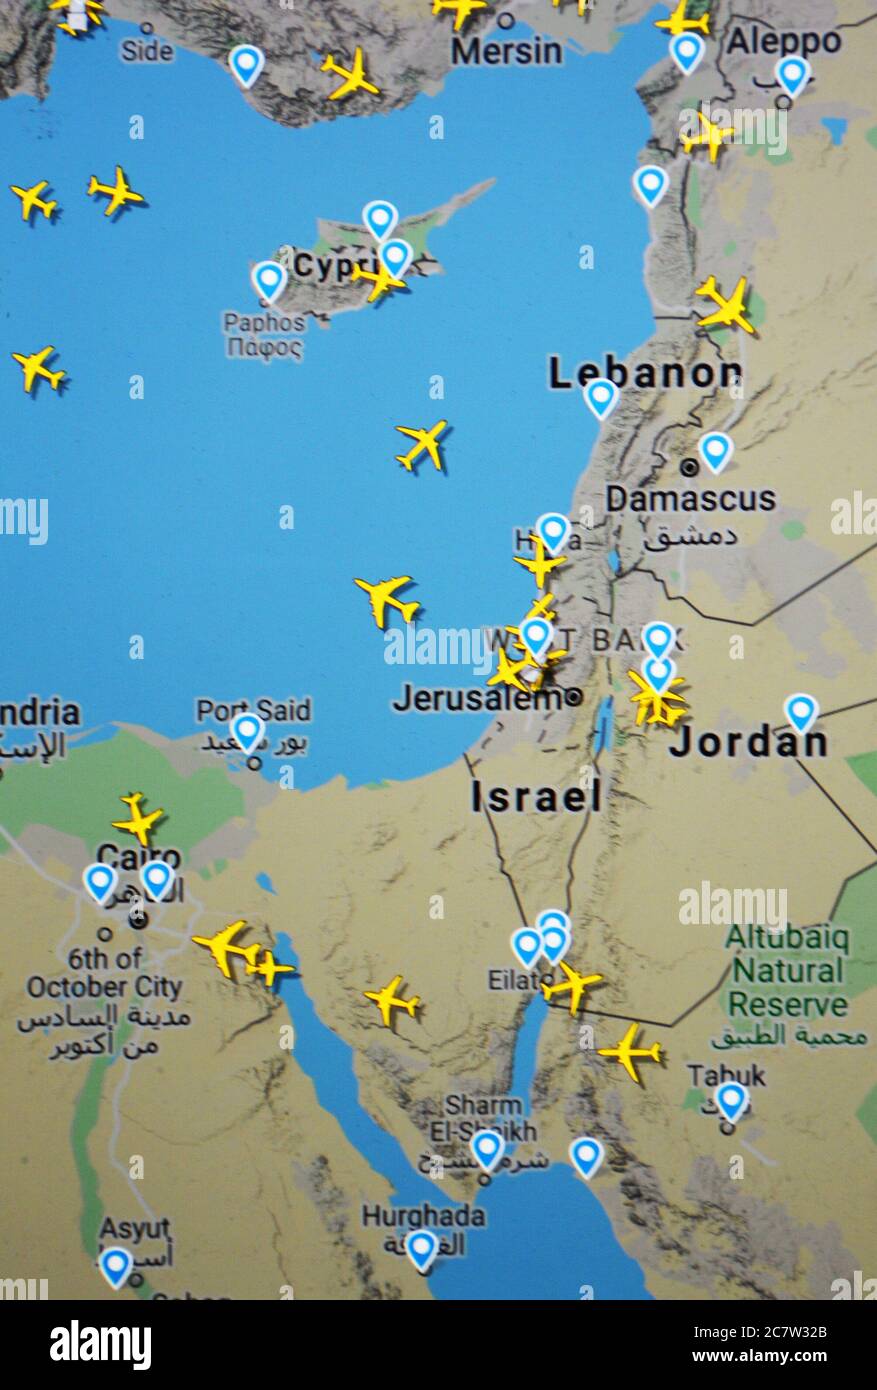 air traffic over Egypt, Israel, Jordan, Lebanon Syria, Cyprus, Turkey (19 july 2020, UTC 15.42)  on Internet with Flightradar 24 site Stock Photo